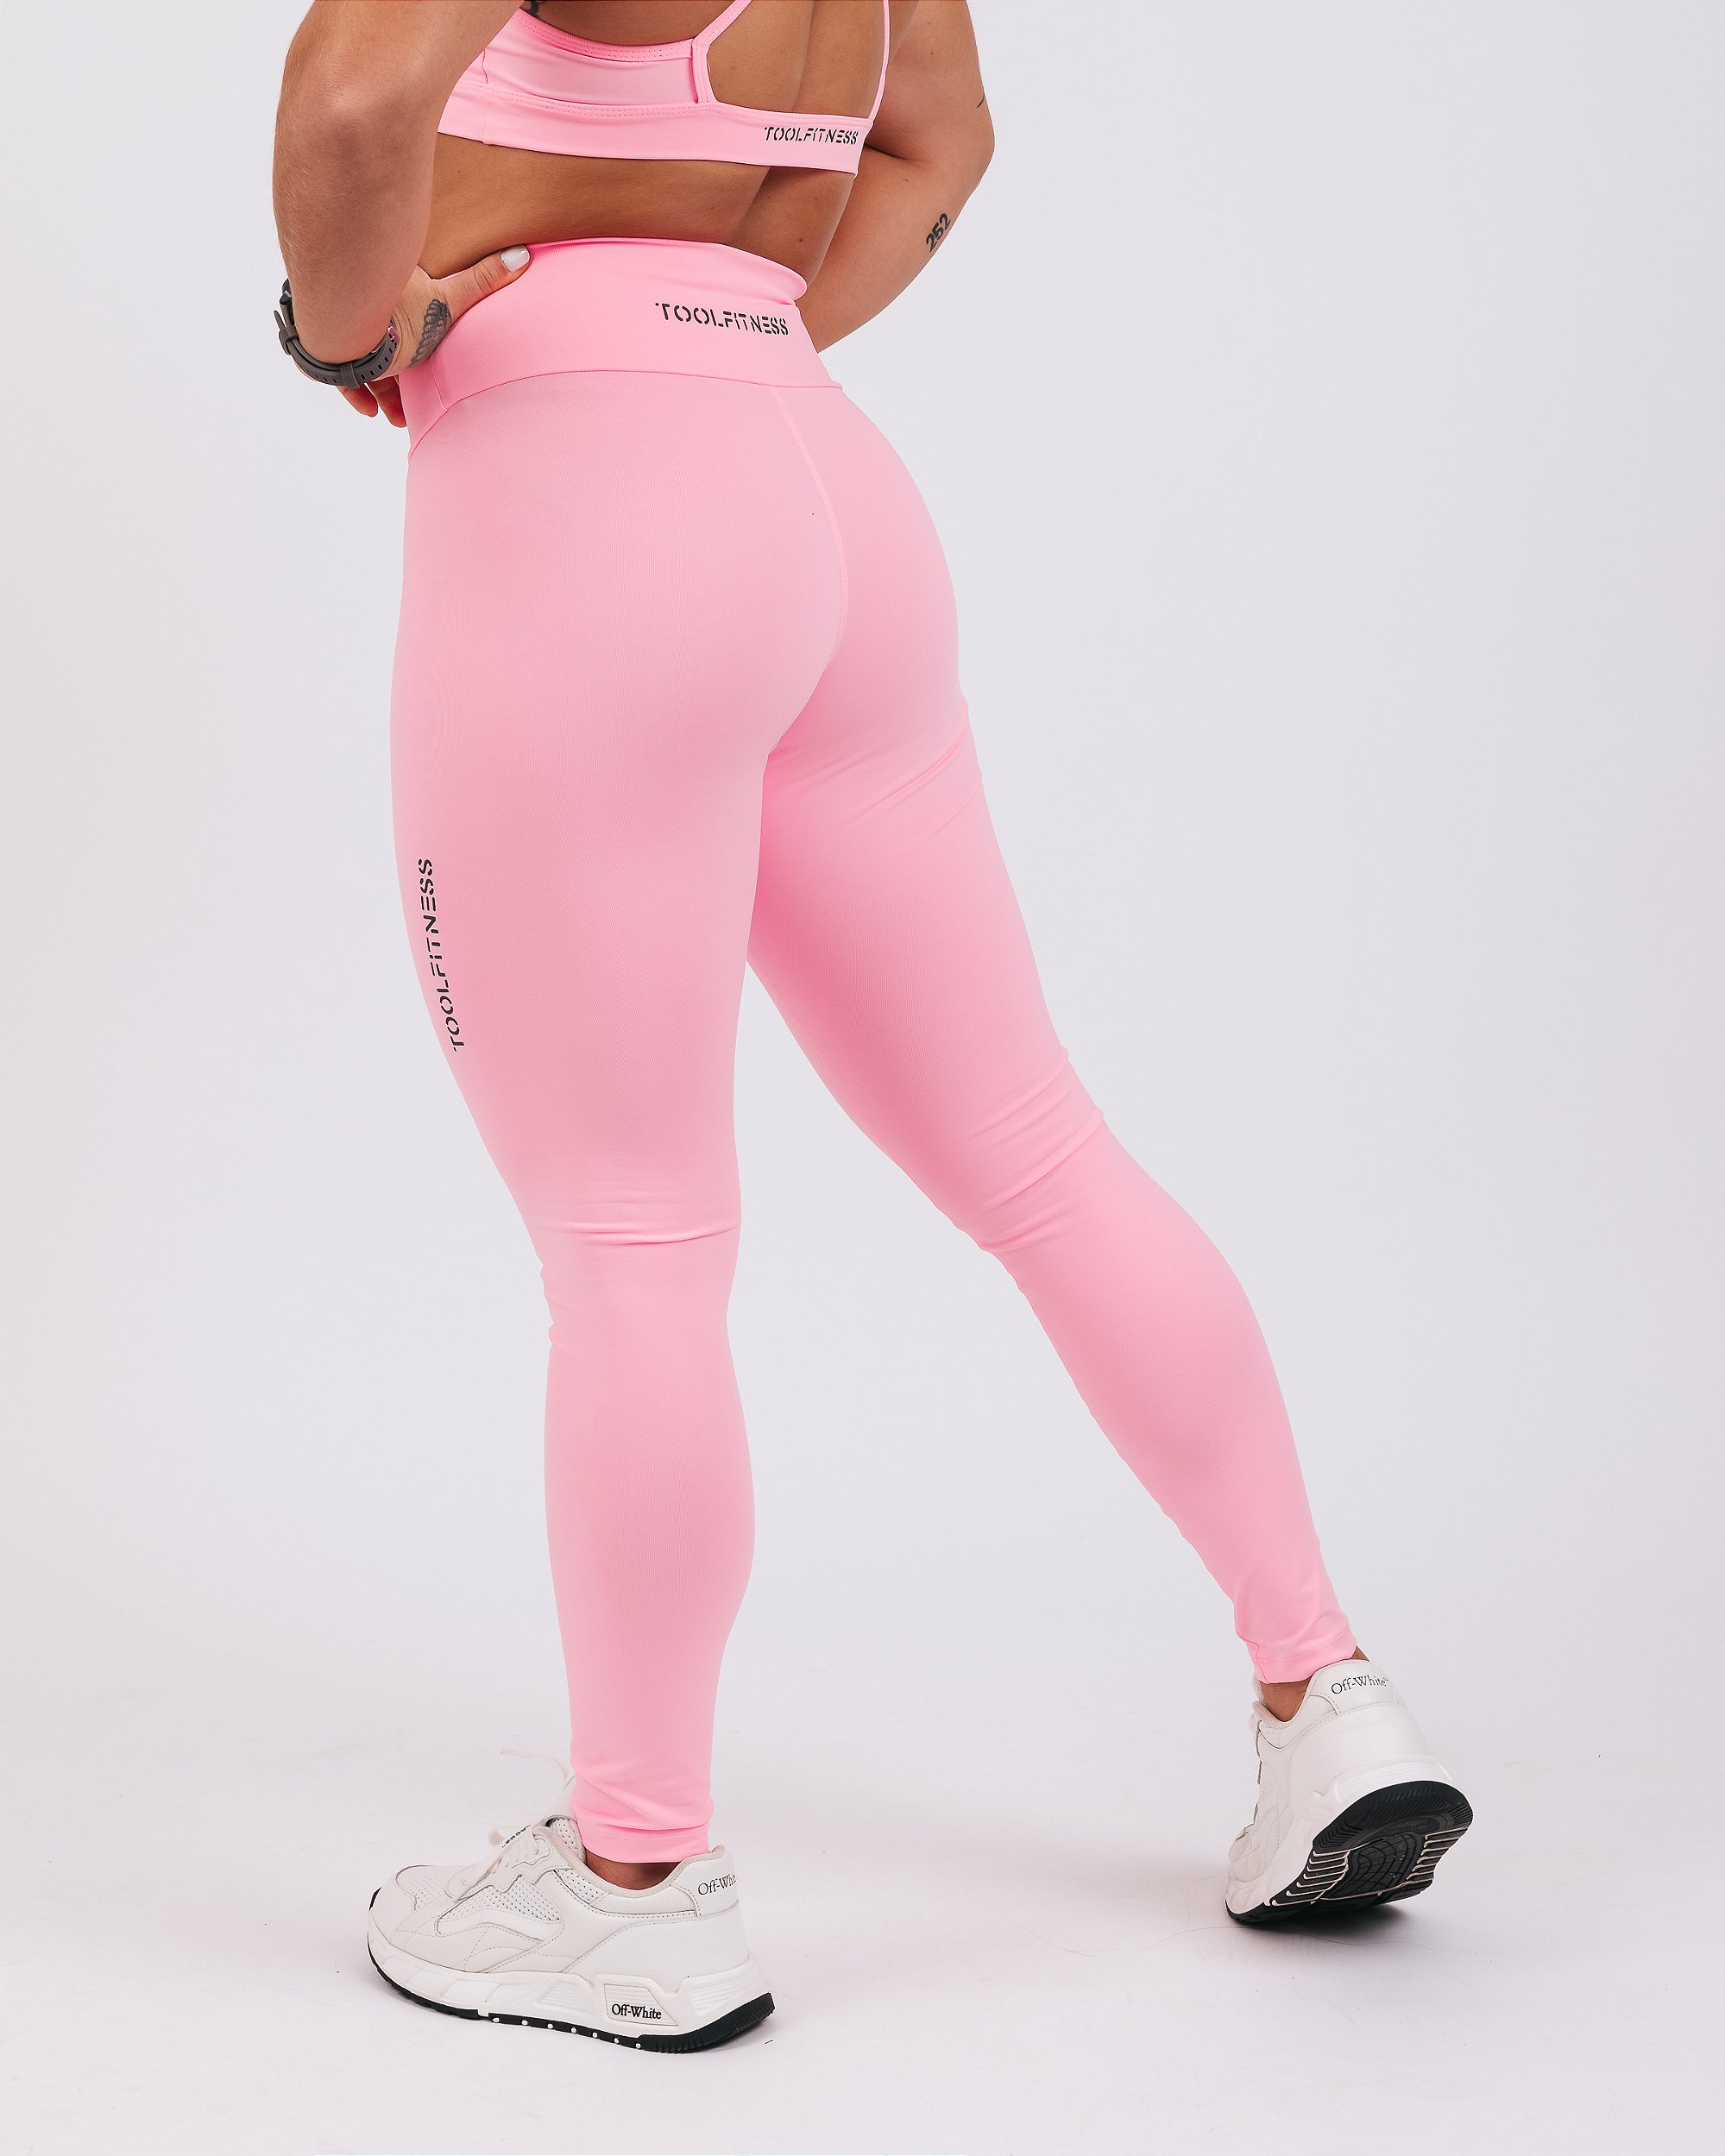 Legging Toolfitness Sport Feminina - Candy pink - ToolFitness